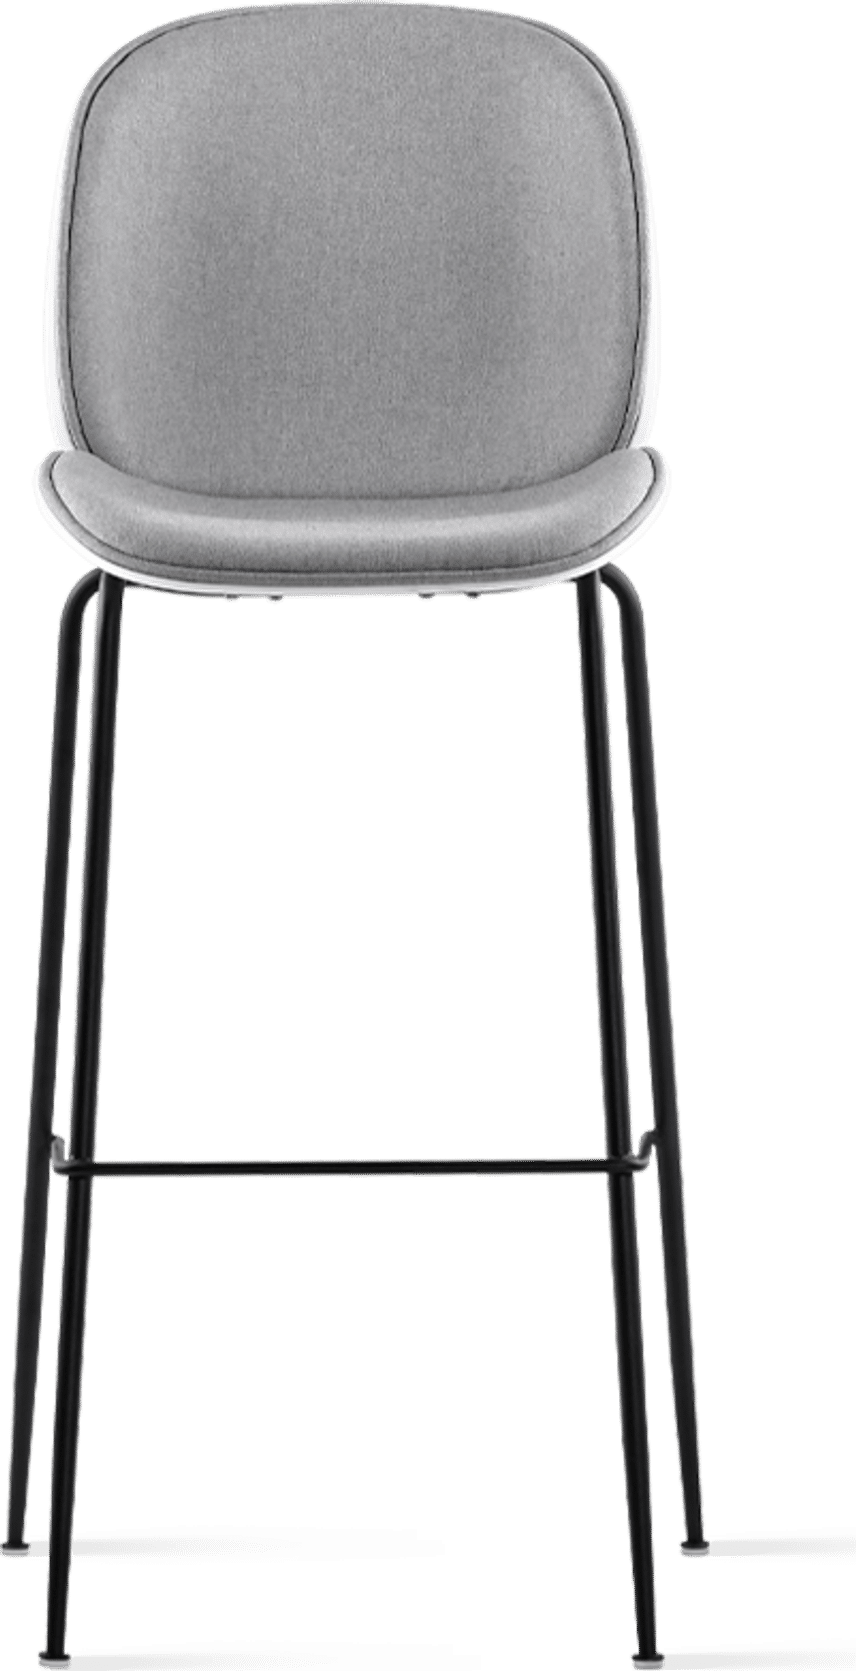 Beetle Style Barstool - Full Upholstered Grey/Black image.